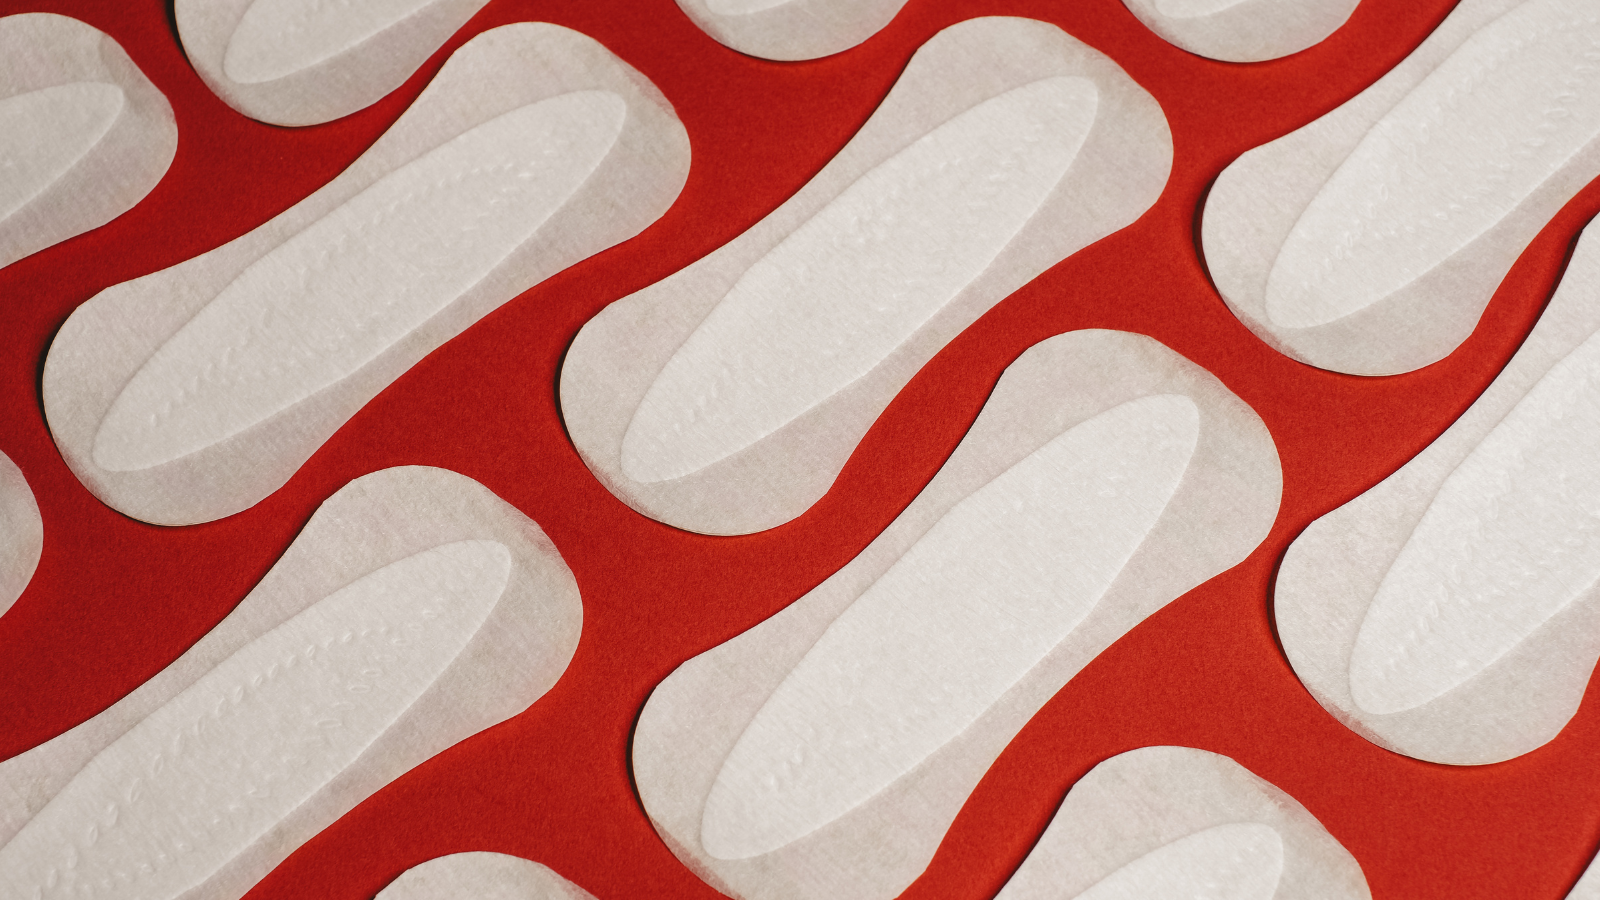 Bleeding in healthcare settings: Why healthcare workers menstrual health must be addressed